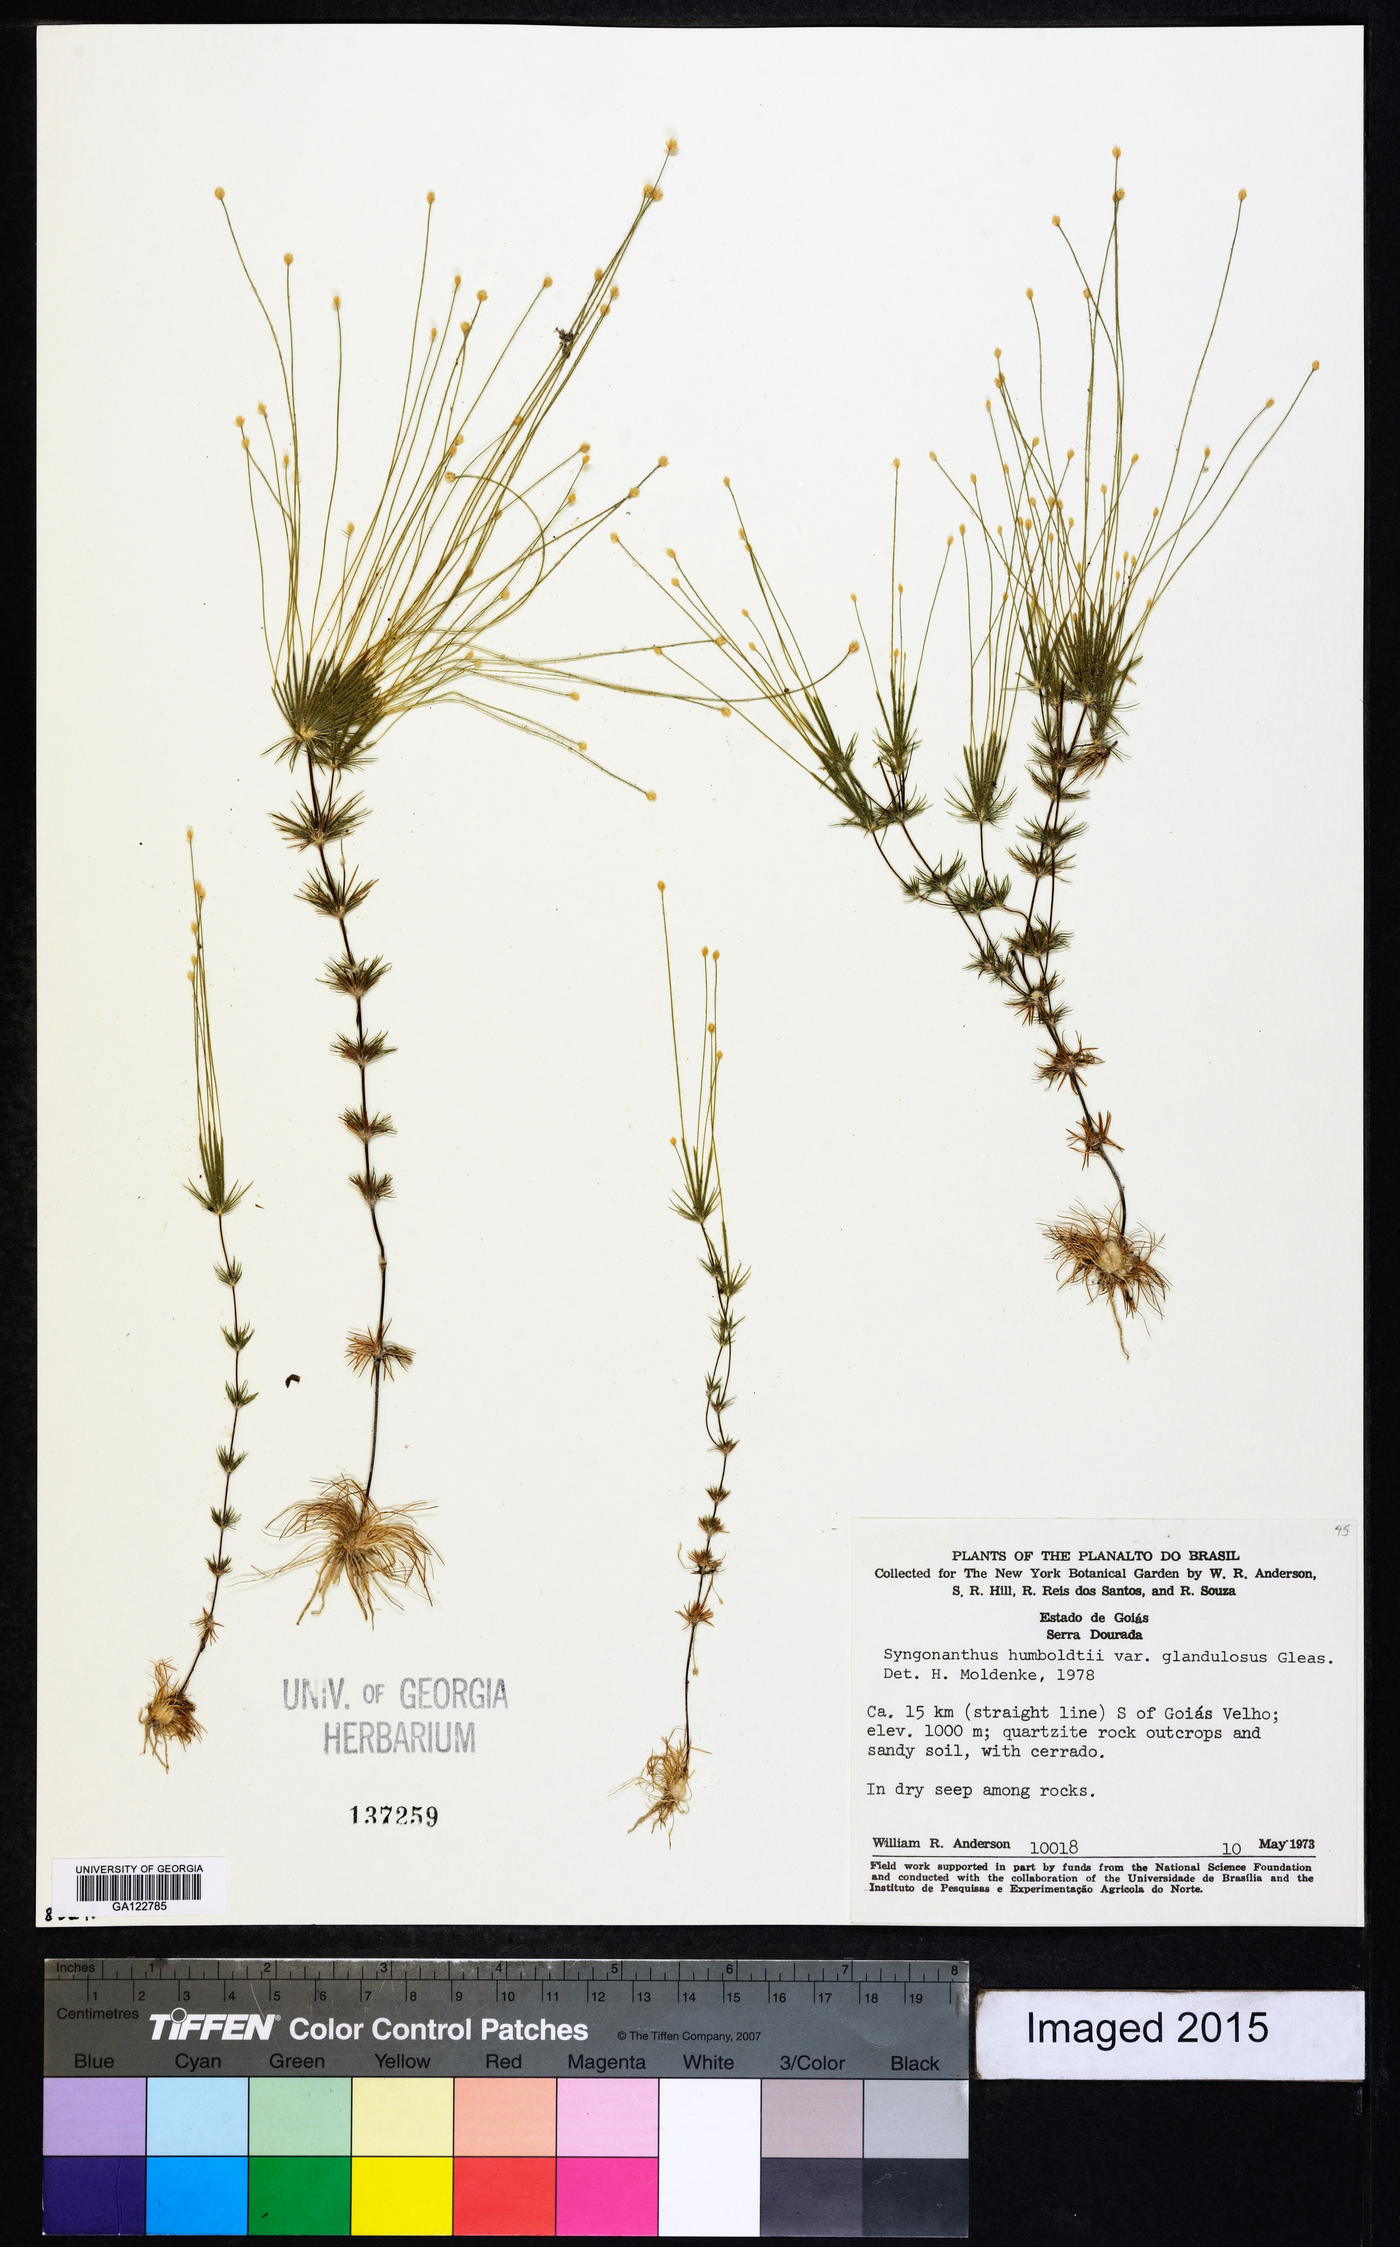 Syngonanthus humboldtii var. humboldtii image